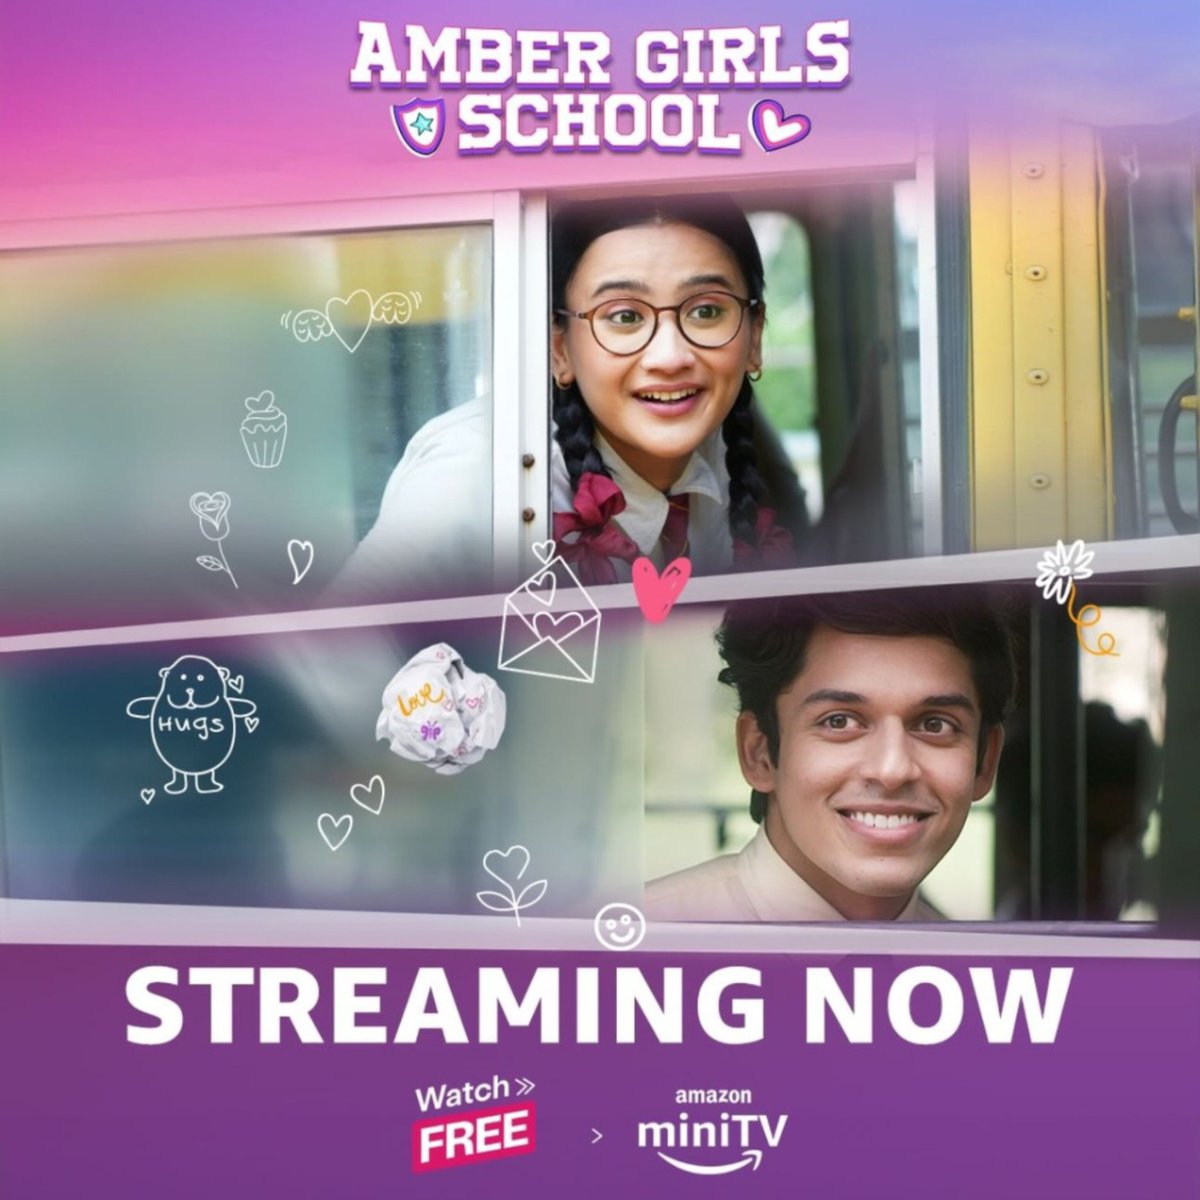 New Series #AmberGirlsSchool Streaming Now On #AmazonMiniTV Free.
Starring: #CelestiBairagey, #KajolChugh, #ShrutiPanwar, #HarshKhurana, #IshikaGagneja, #AdrijaSinha, #SamairaJain, #KeshavMehta & More.
Directed By #RajlaxmiRatanSeth.

#AmberGirlsSchoolOnAmazonminiTV #MovieSpy